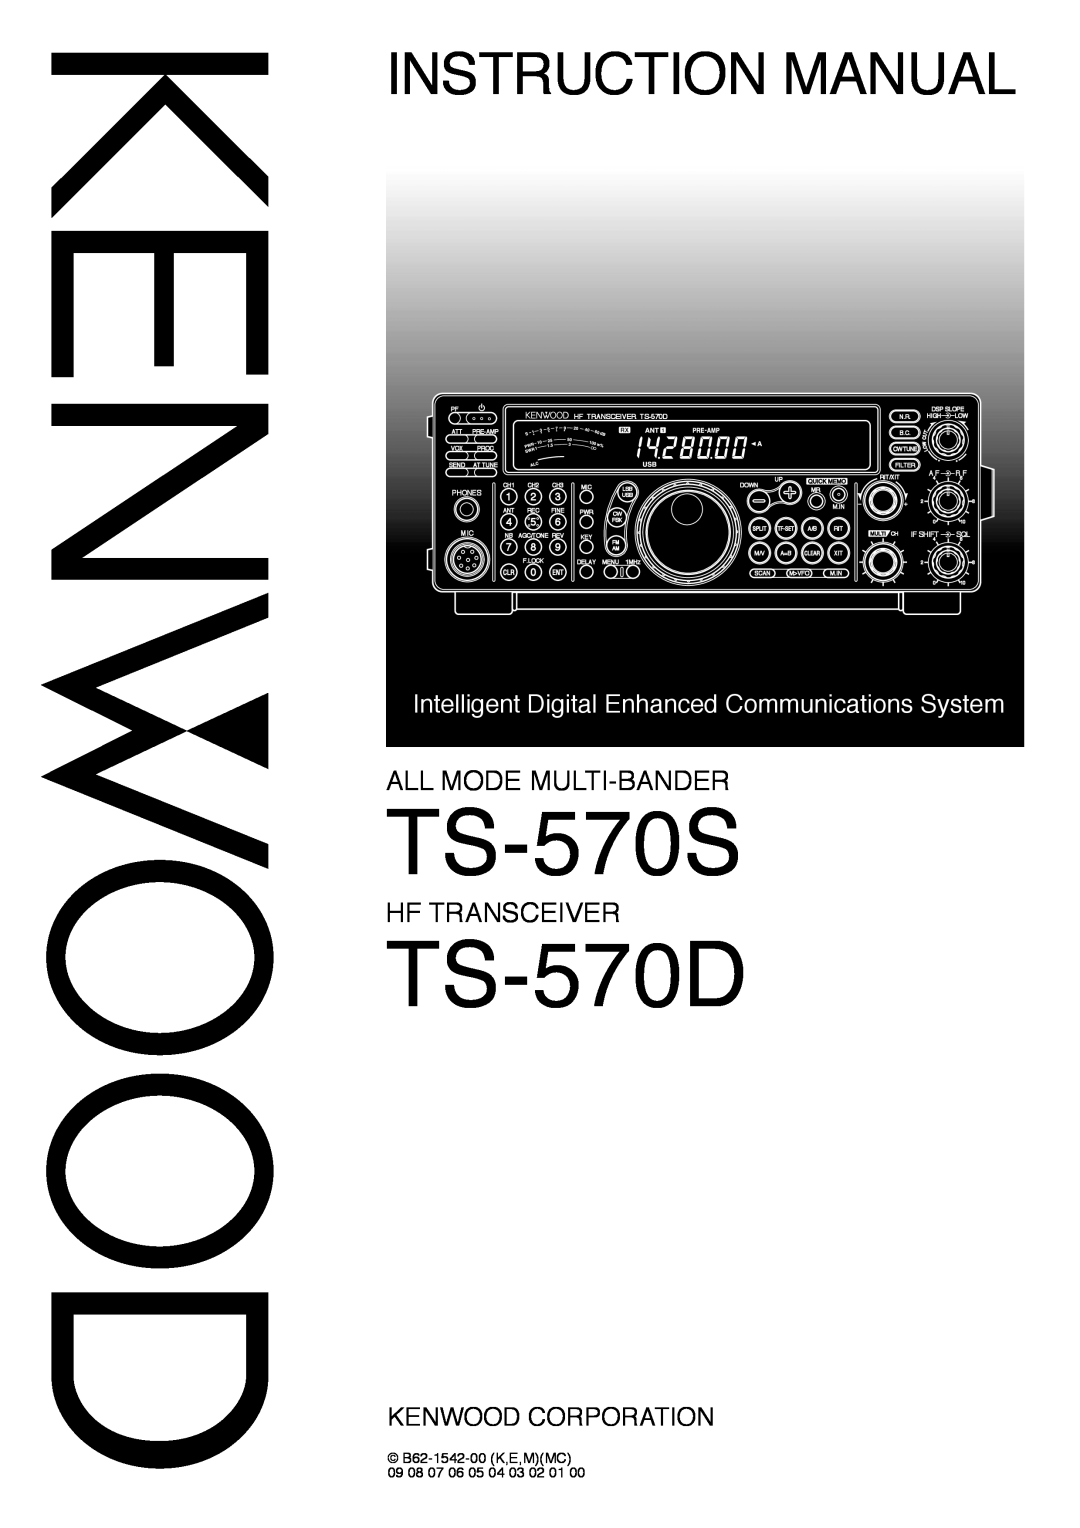 Kenwood TS-570D instruction manual TS-570S, Instruction Manual, All Mode Multi-Bander, Hf Transceiver, Kenwood Corporation 